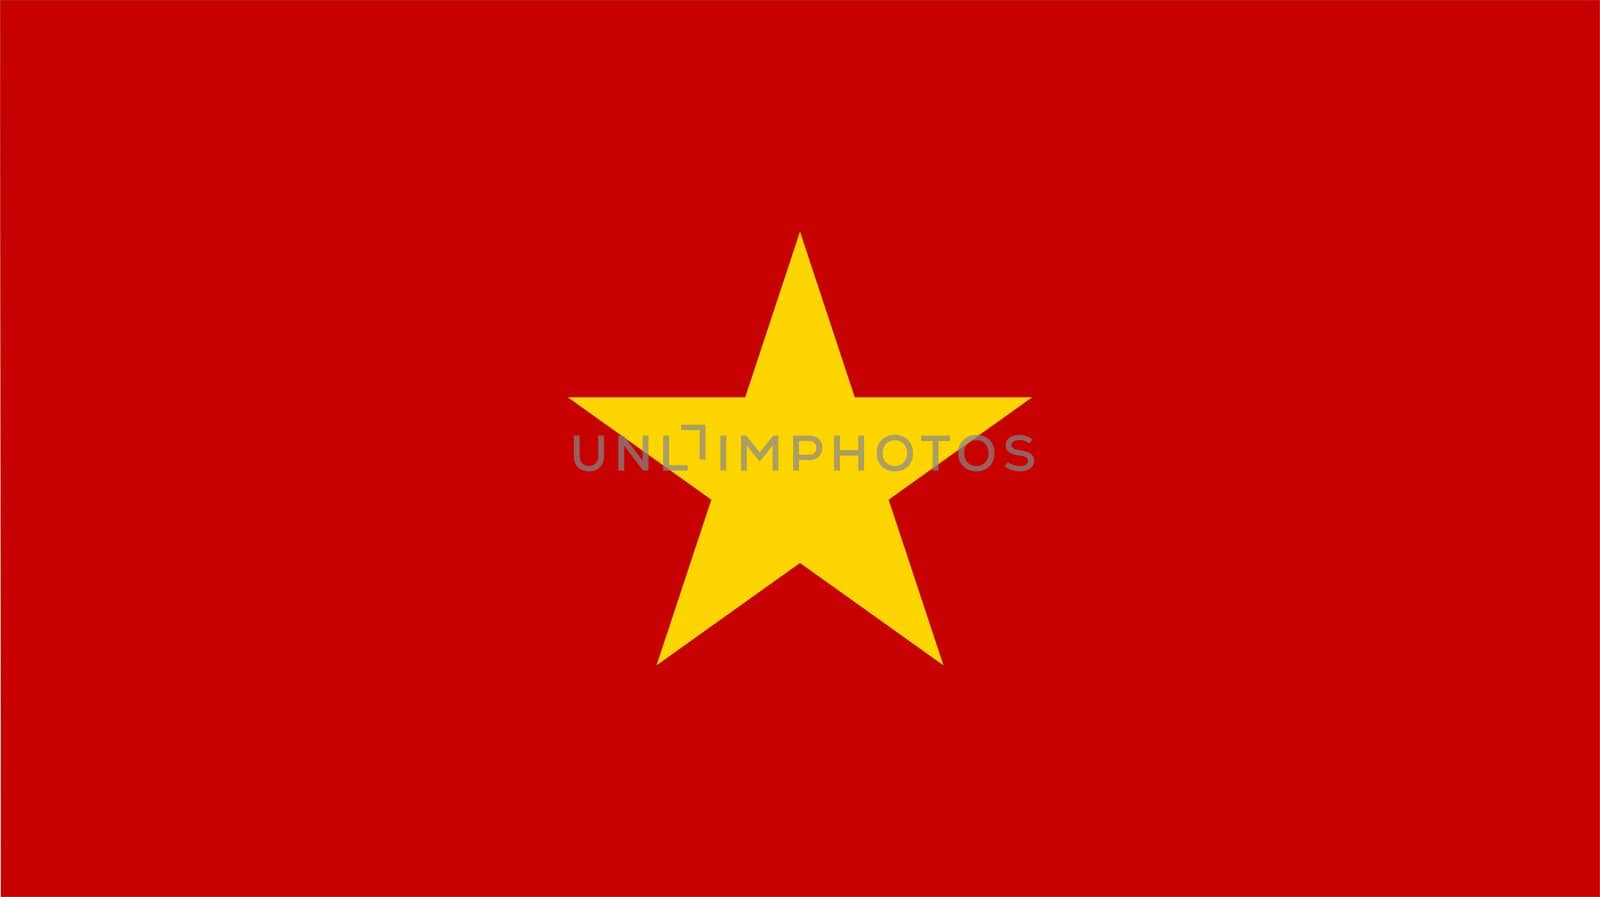 2D illustration of the flag of vietnam